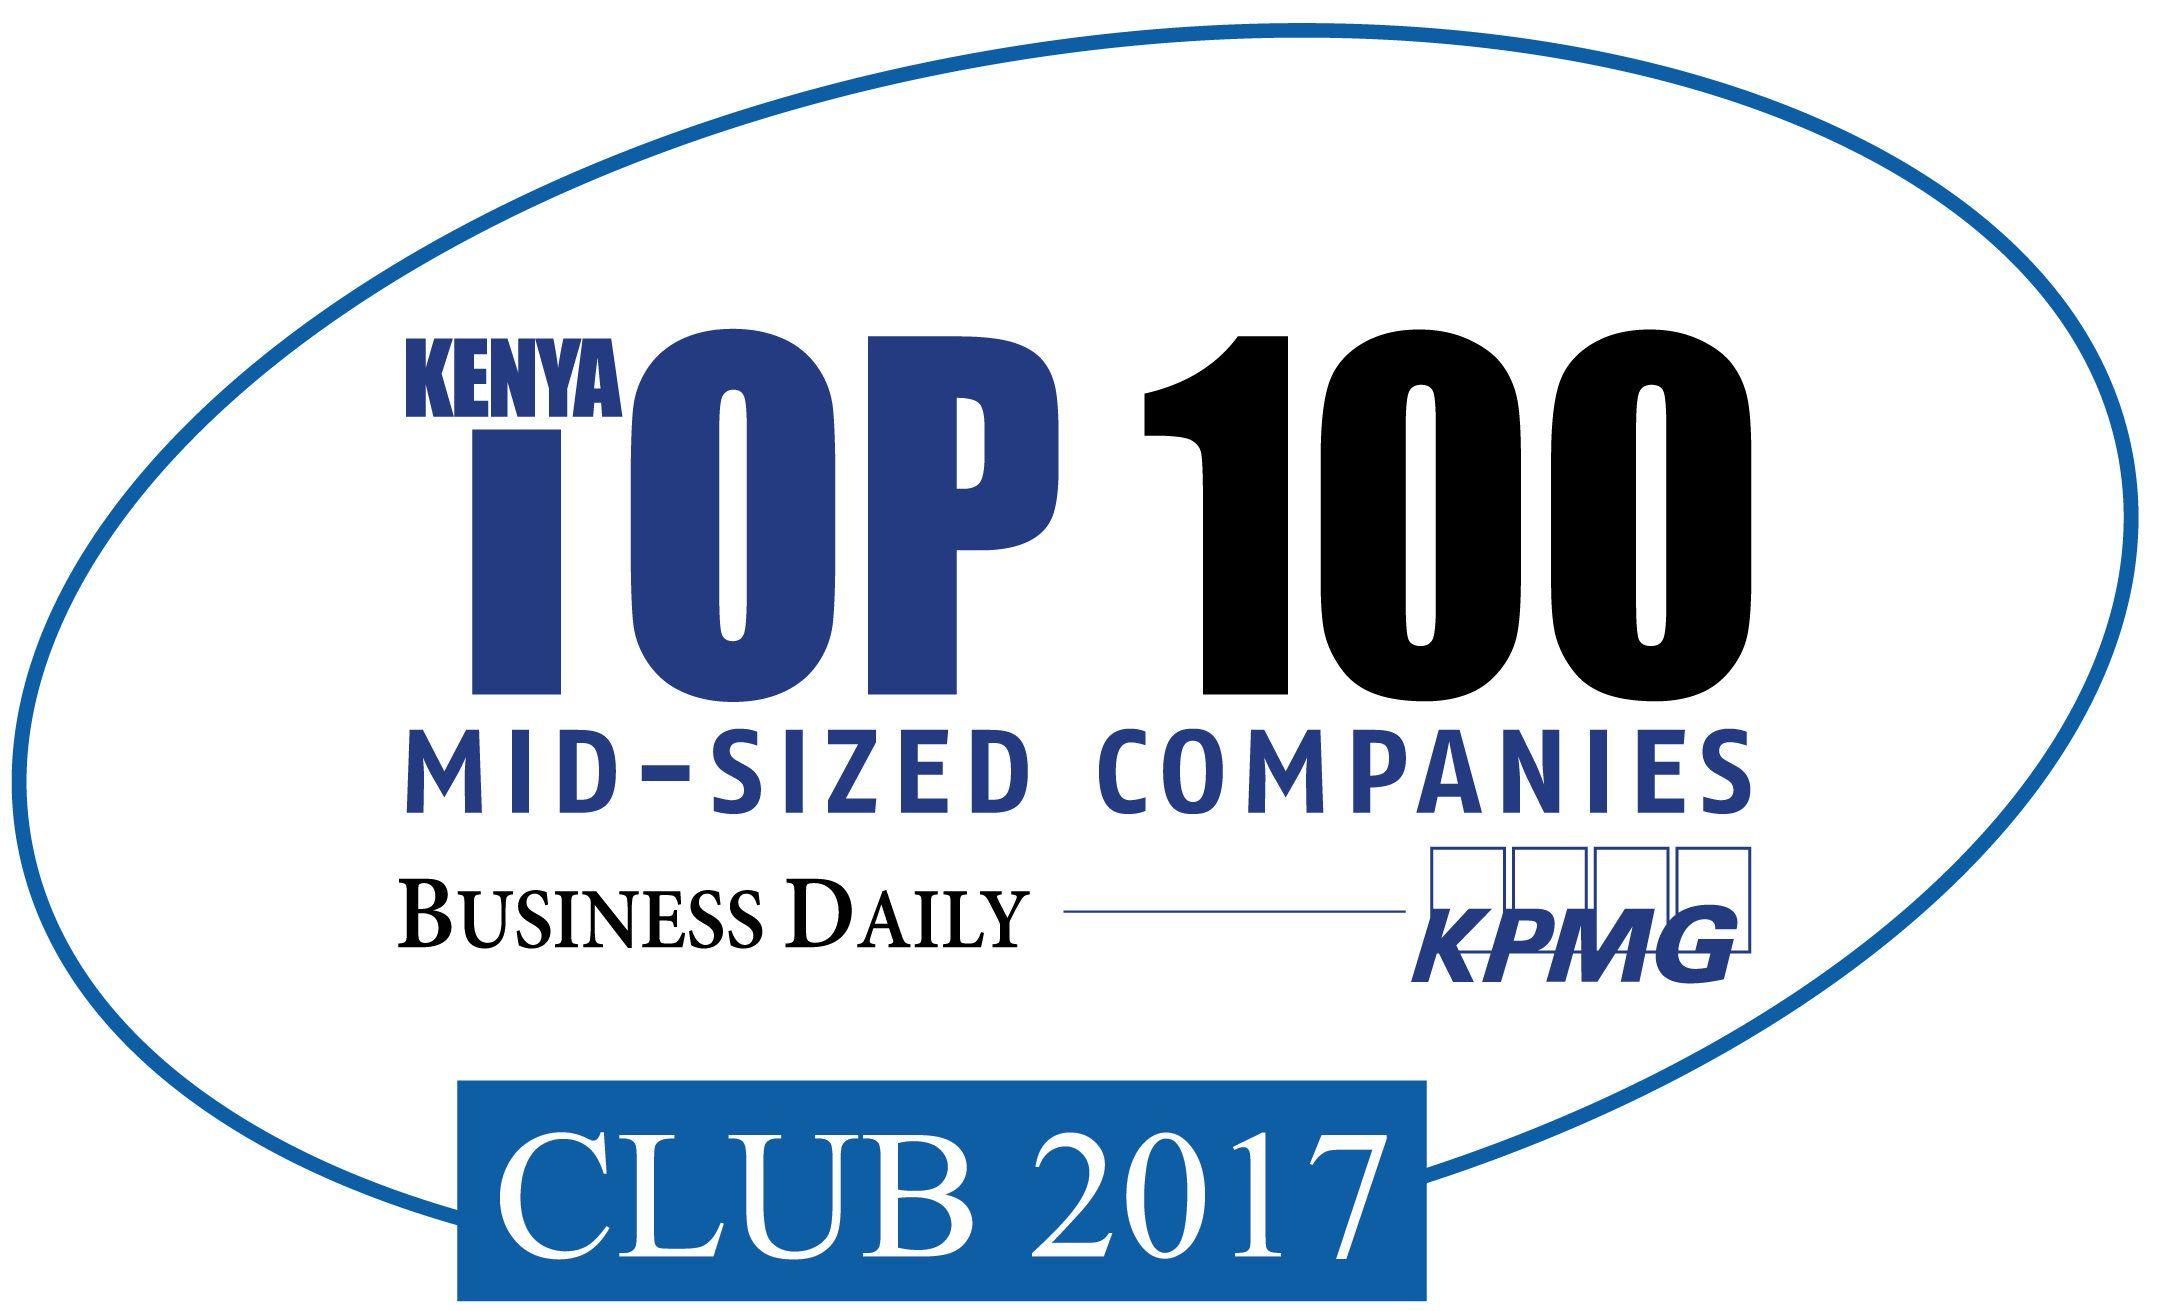 Top 100 Company Logo - Kenya Top100 Club Logo 2017-01 - Sollatek